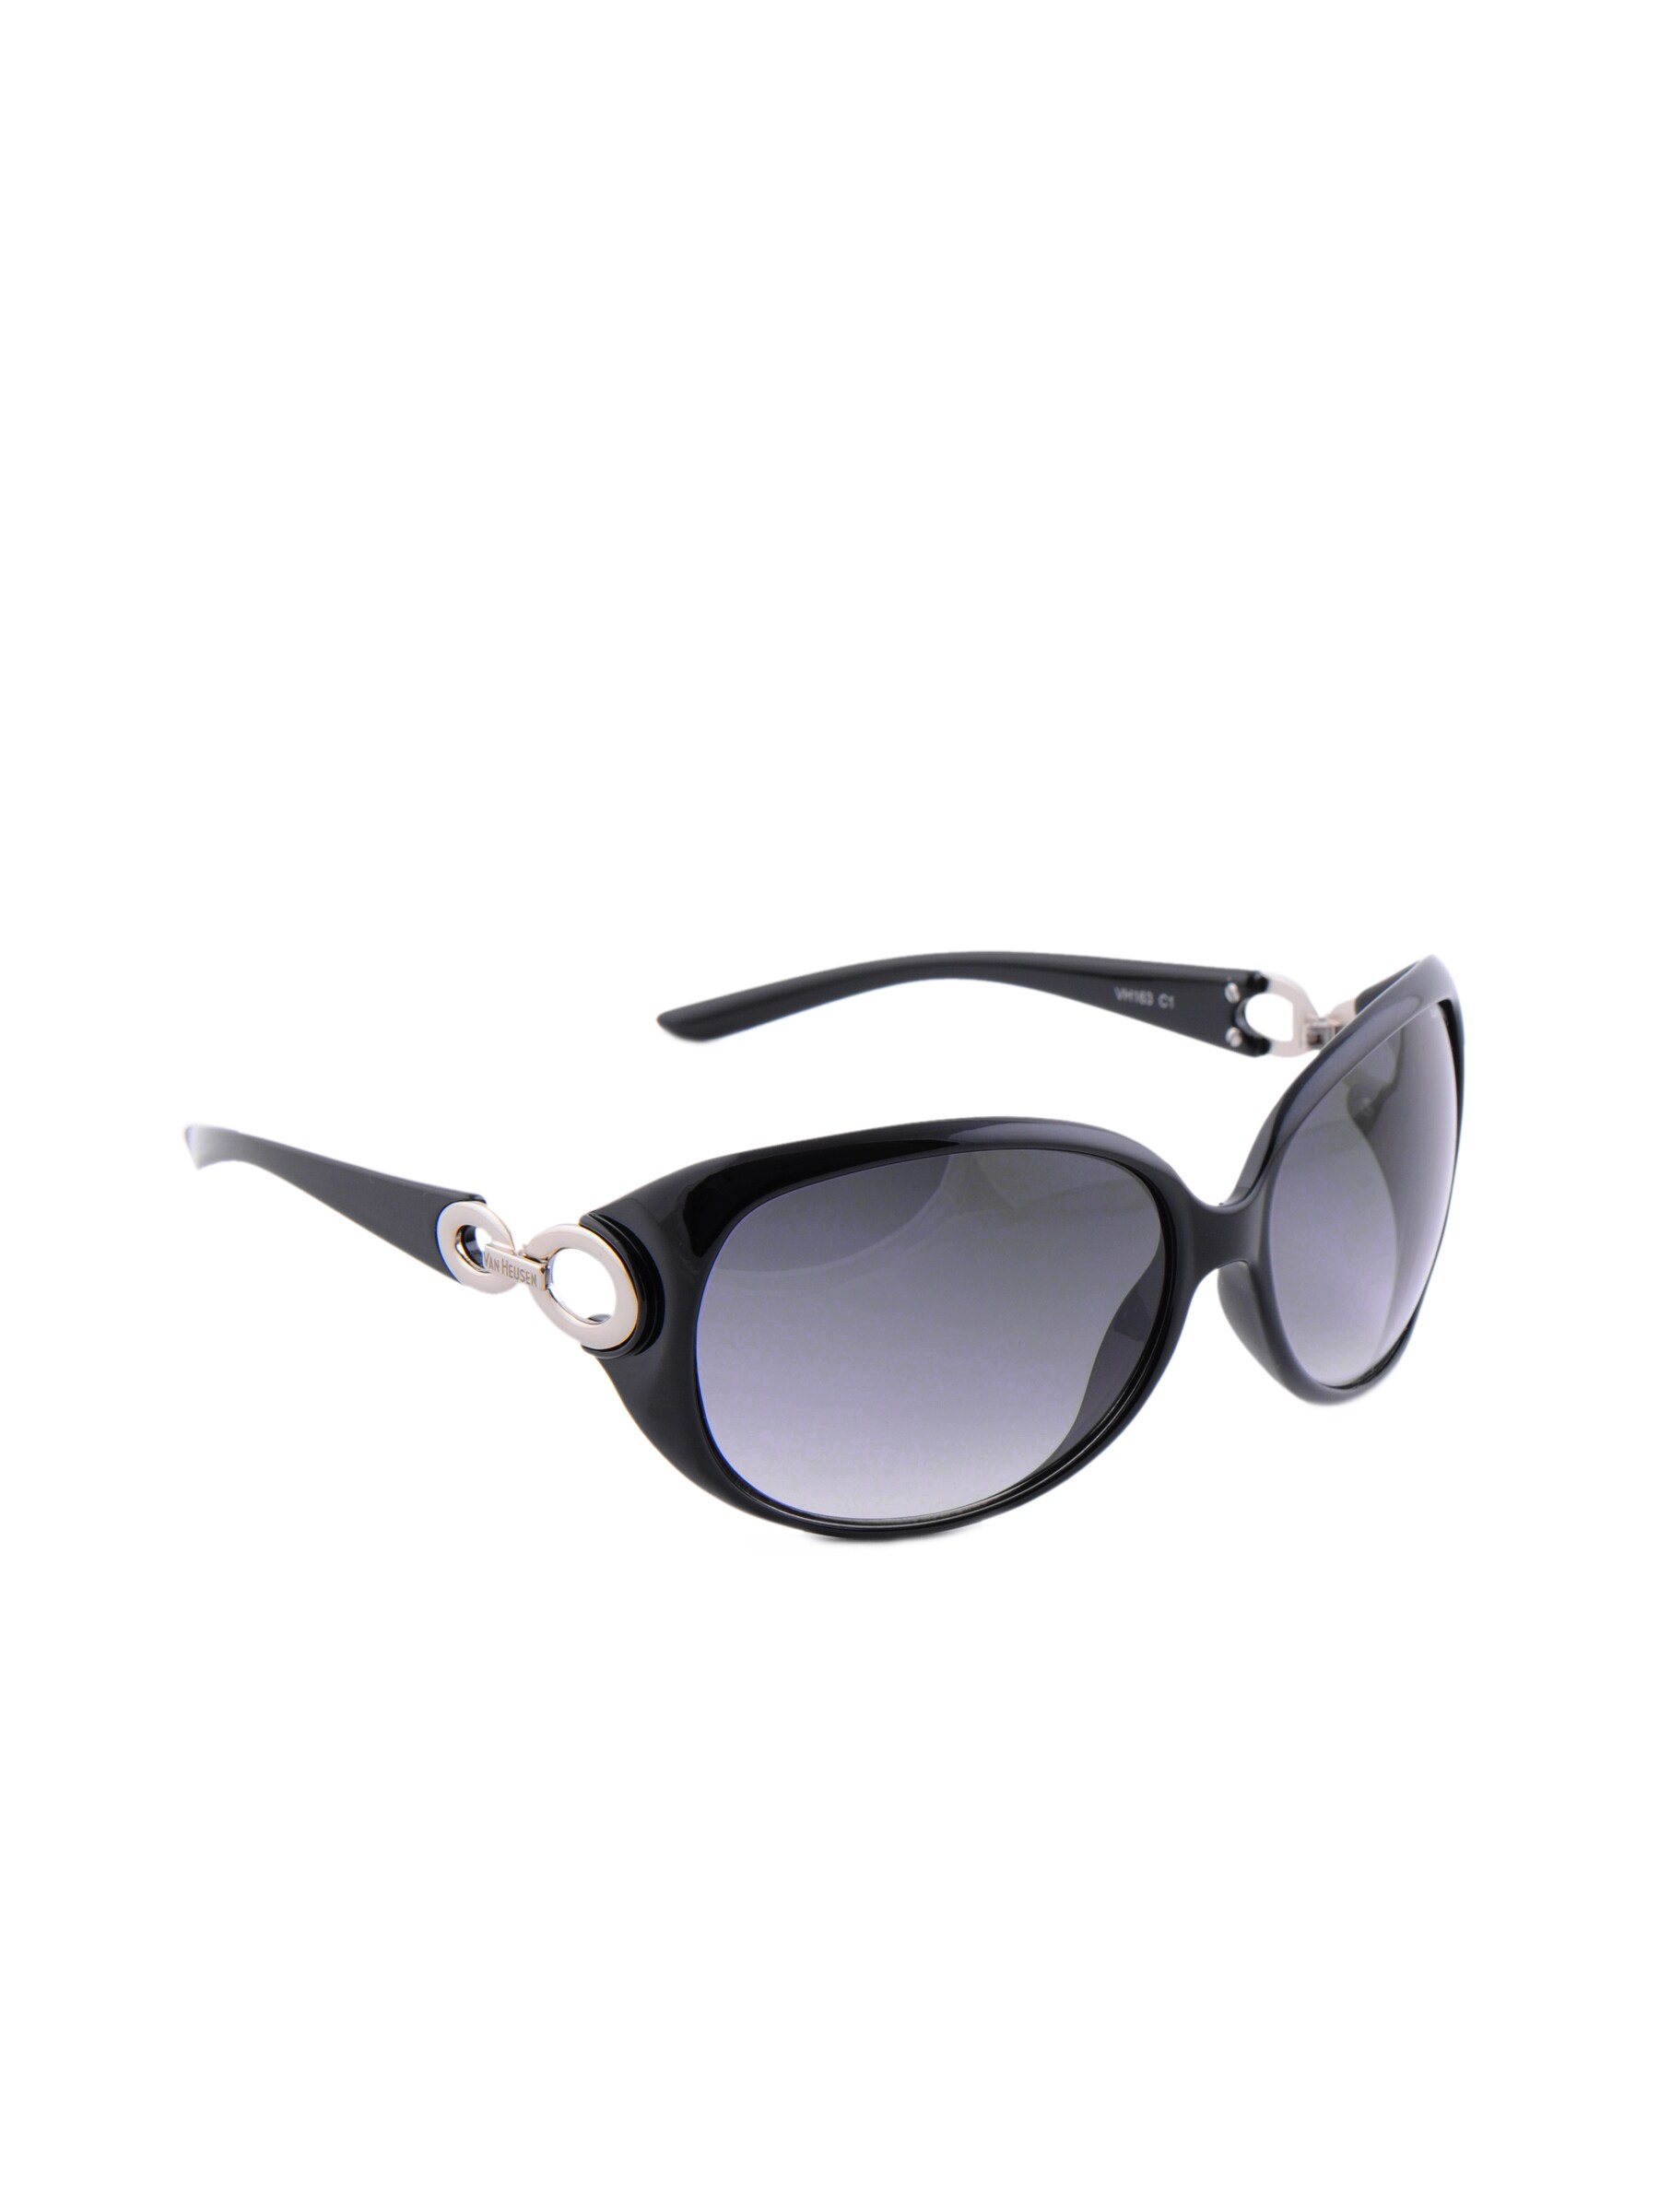 Van Heusen Women Black Oversized Sunglasses VH163-C1